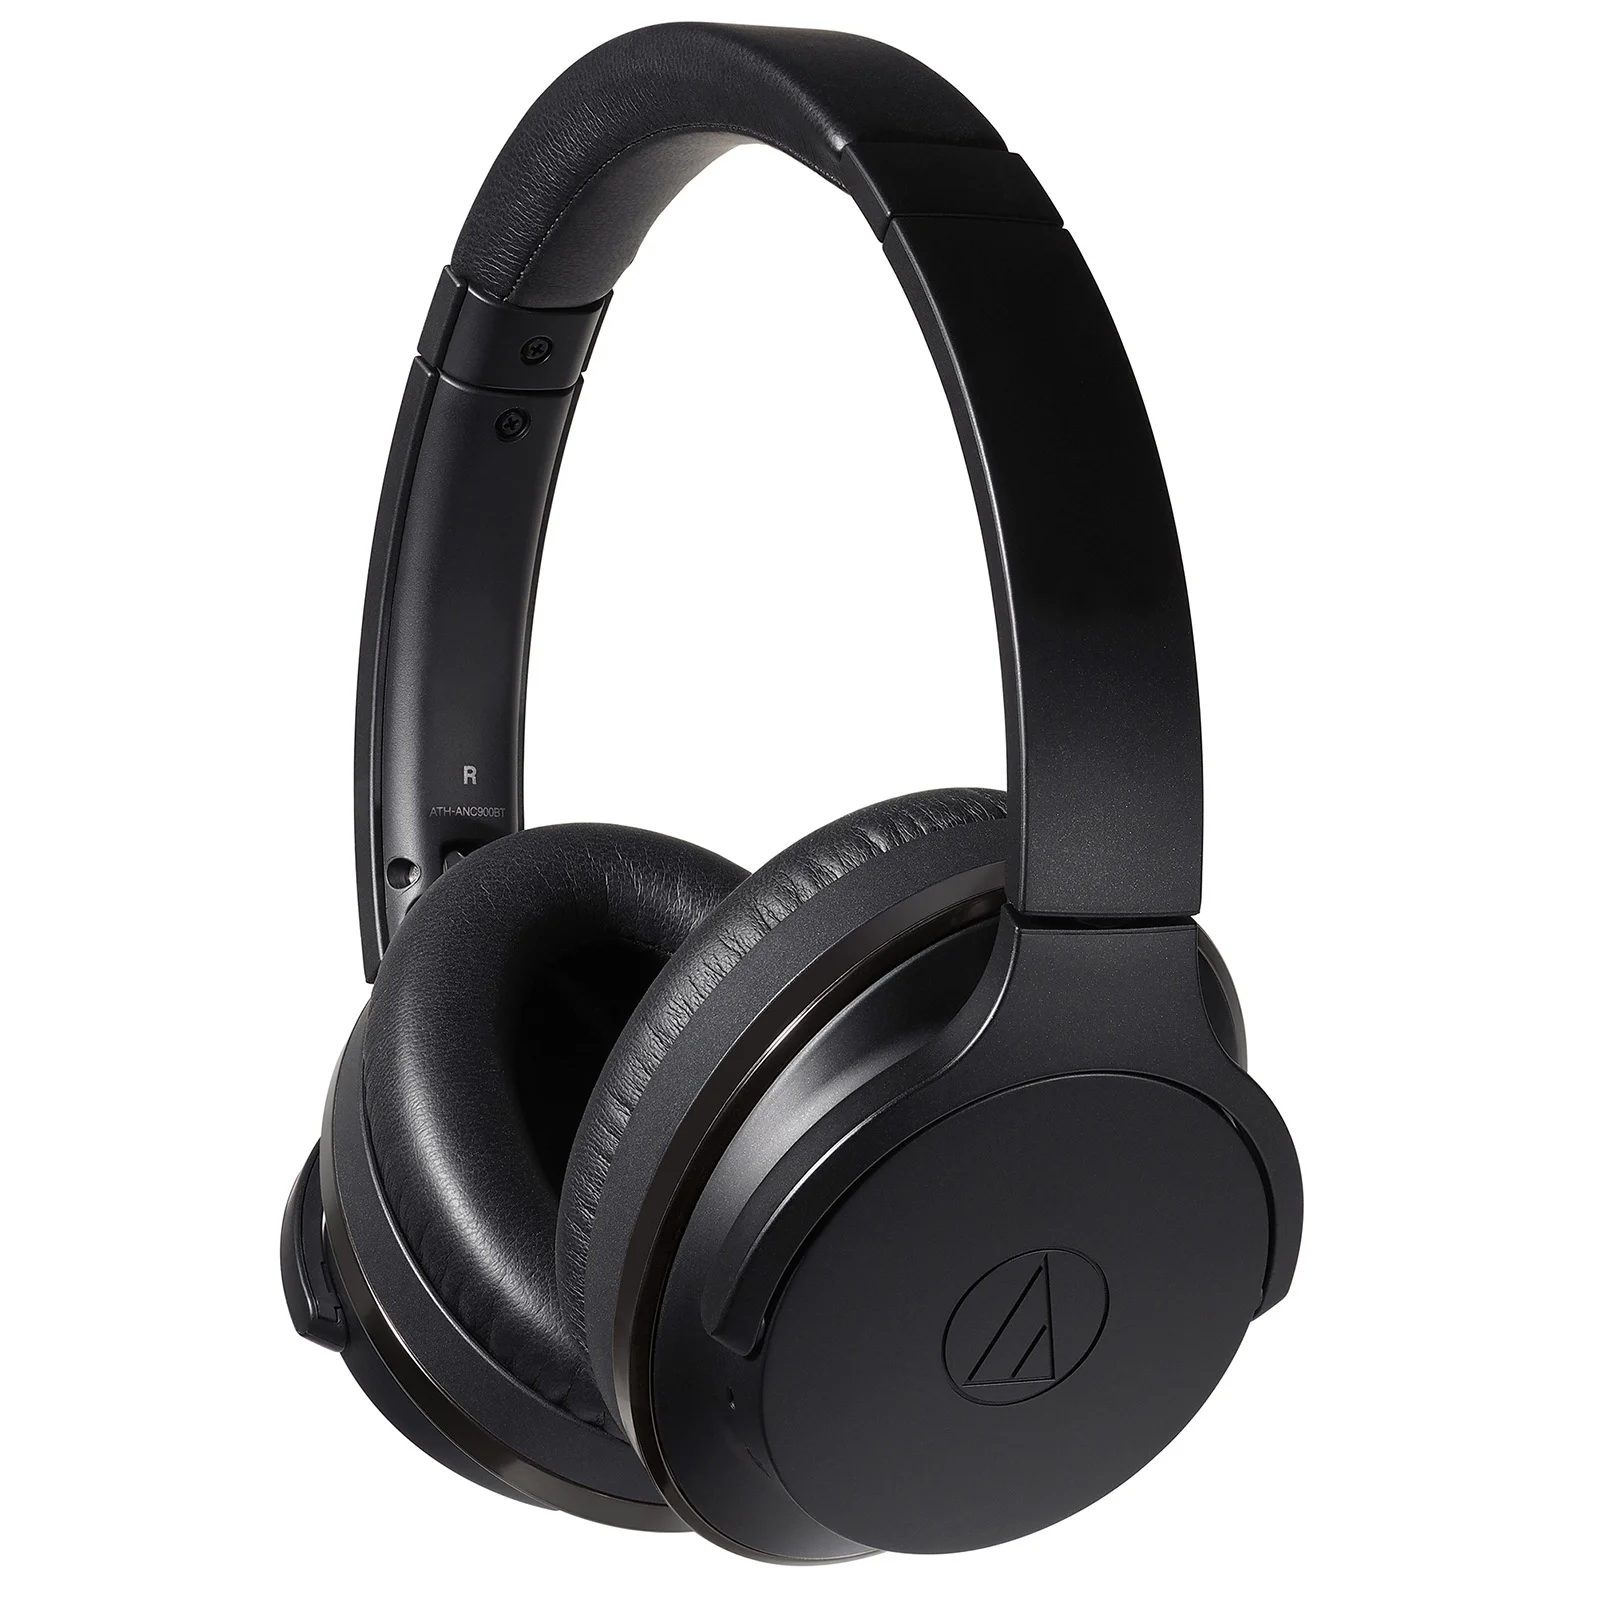 Audio Technica ATH-ANC900BT Wireless Noise Cancelling Headphones - Black Image 1